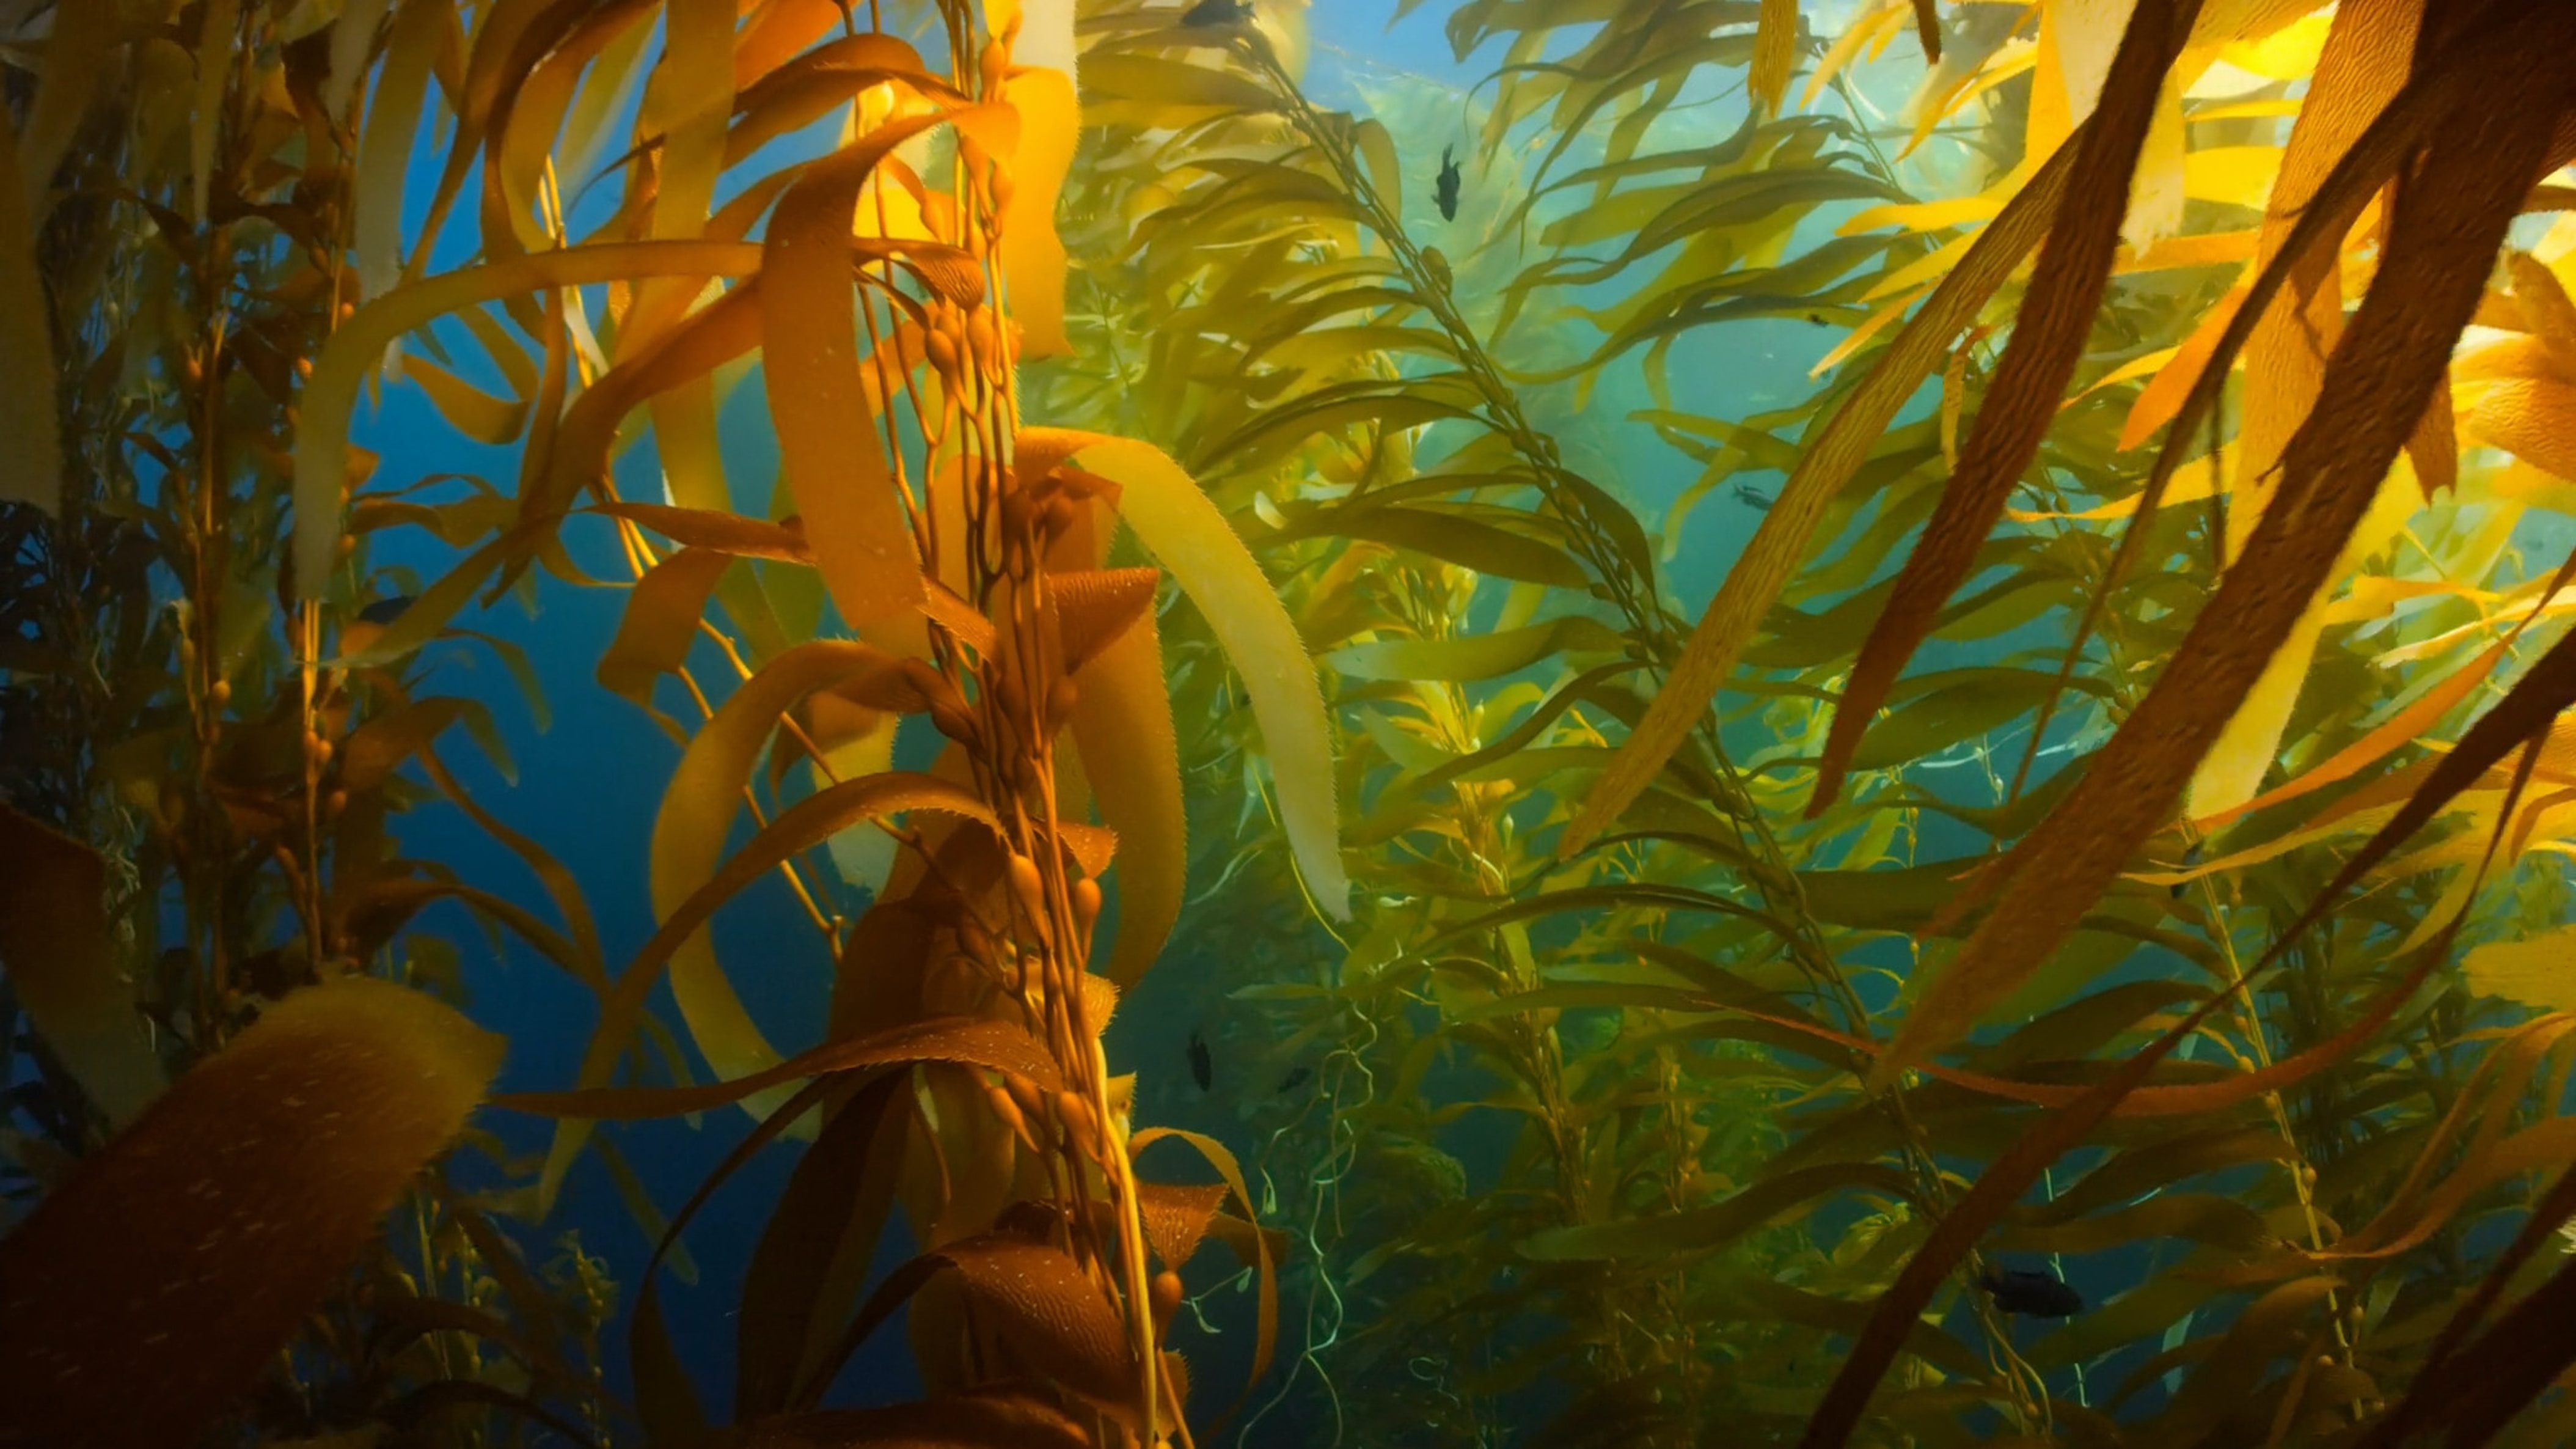 Peering through dense fronds of Giant Kelp, beneath the water.